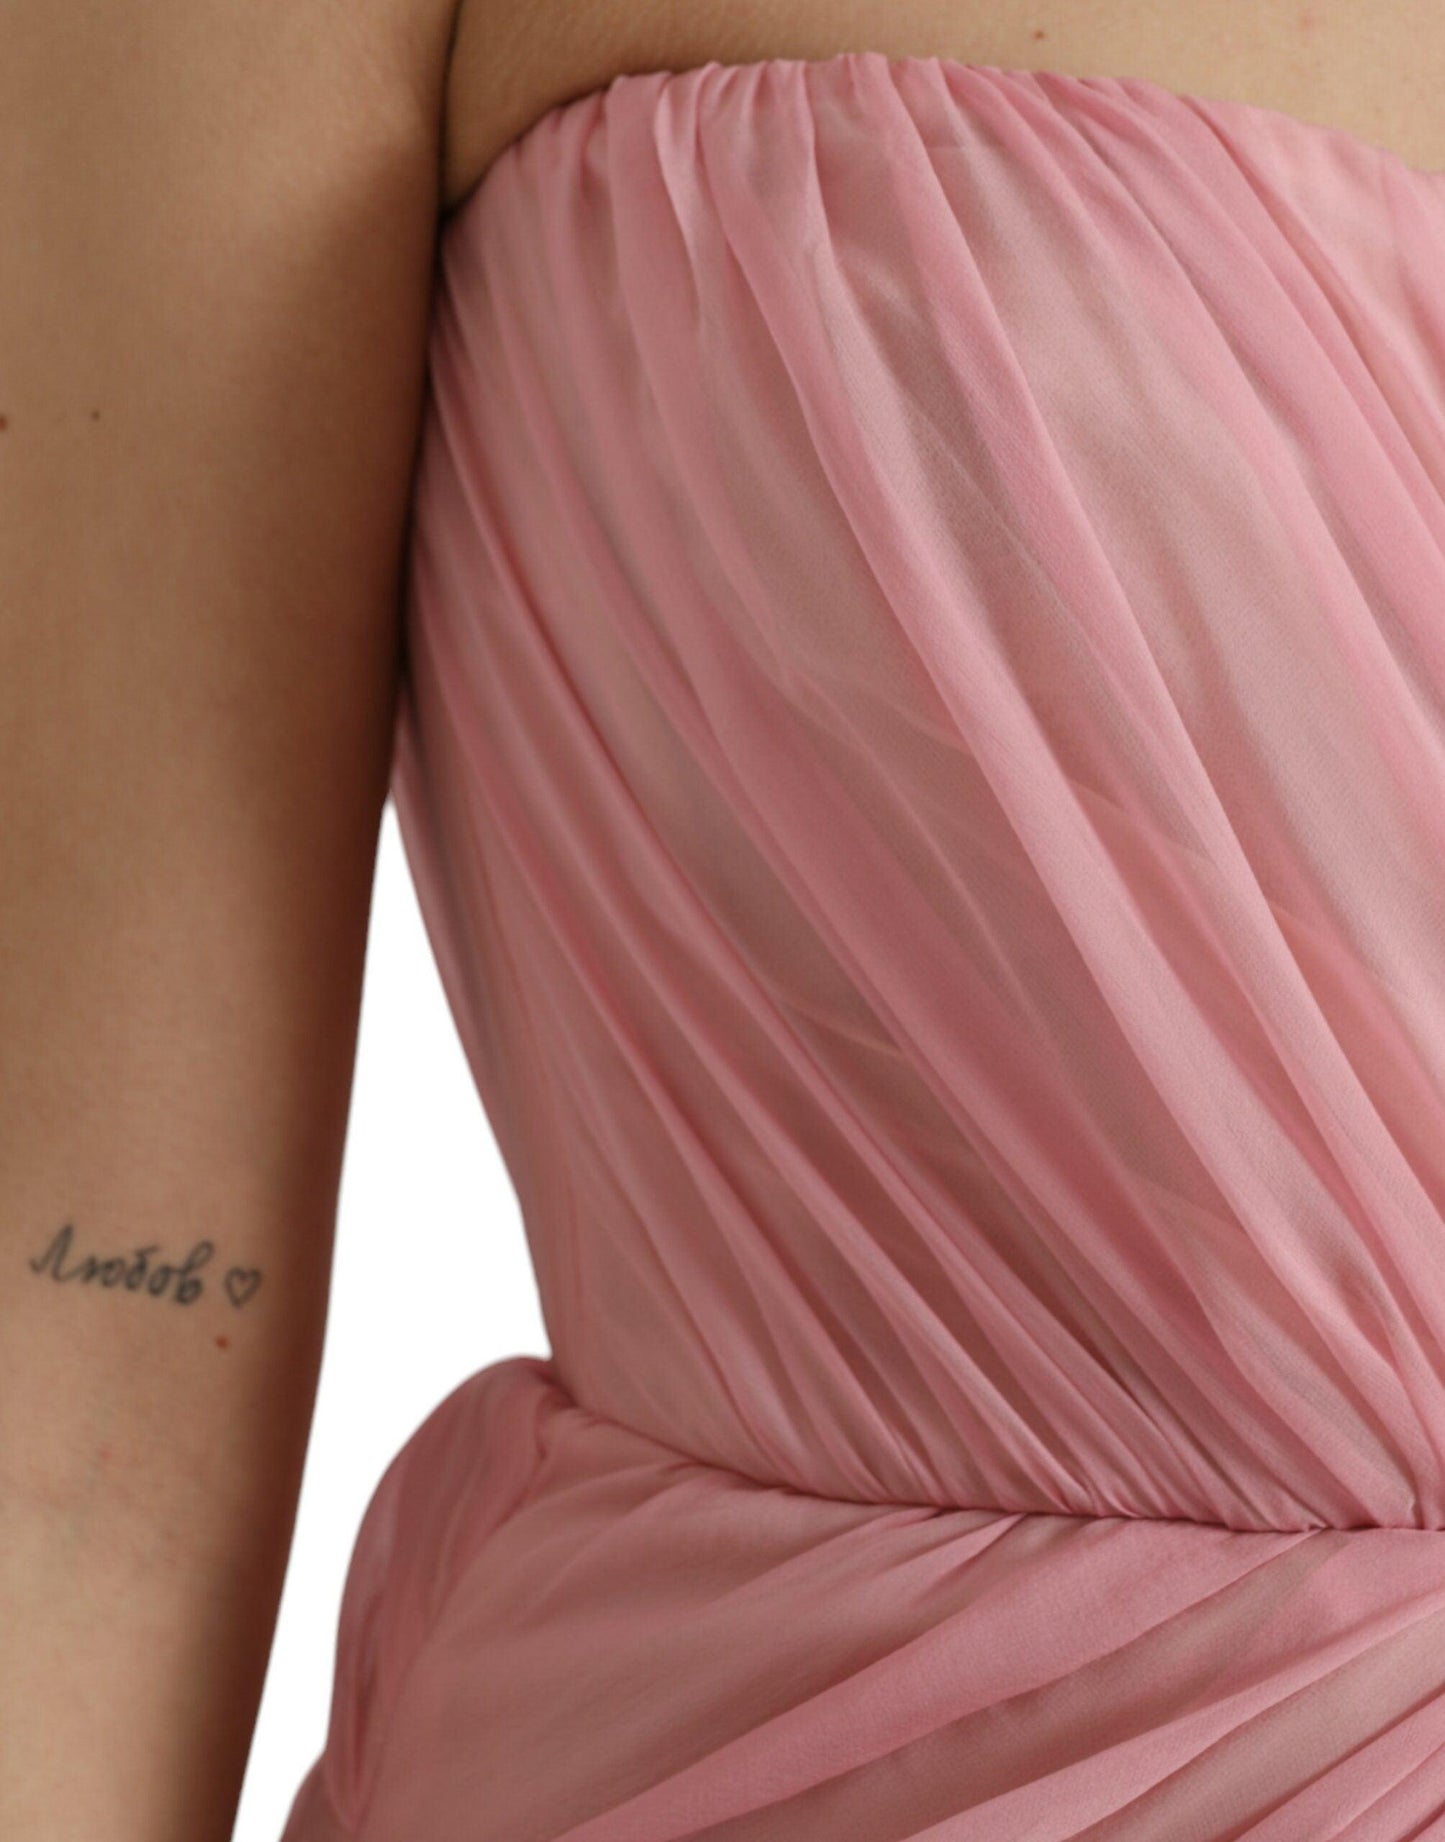 Dolce & Gabbana Pink Silk Strapless Maxi A-line Gown Dress - PER.FASHION